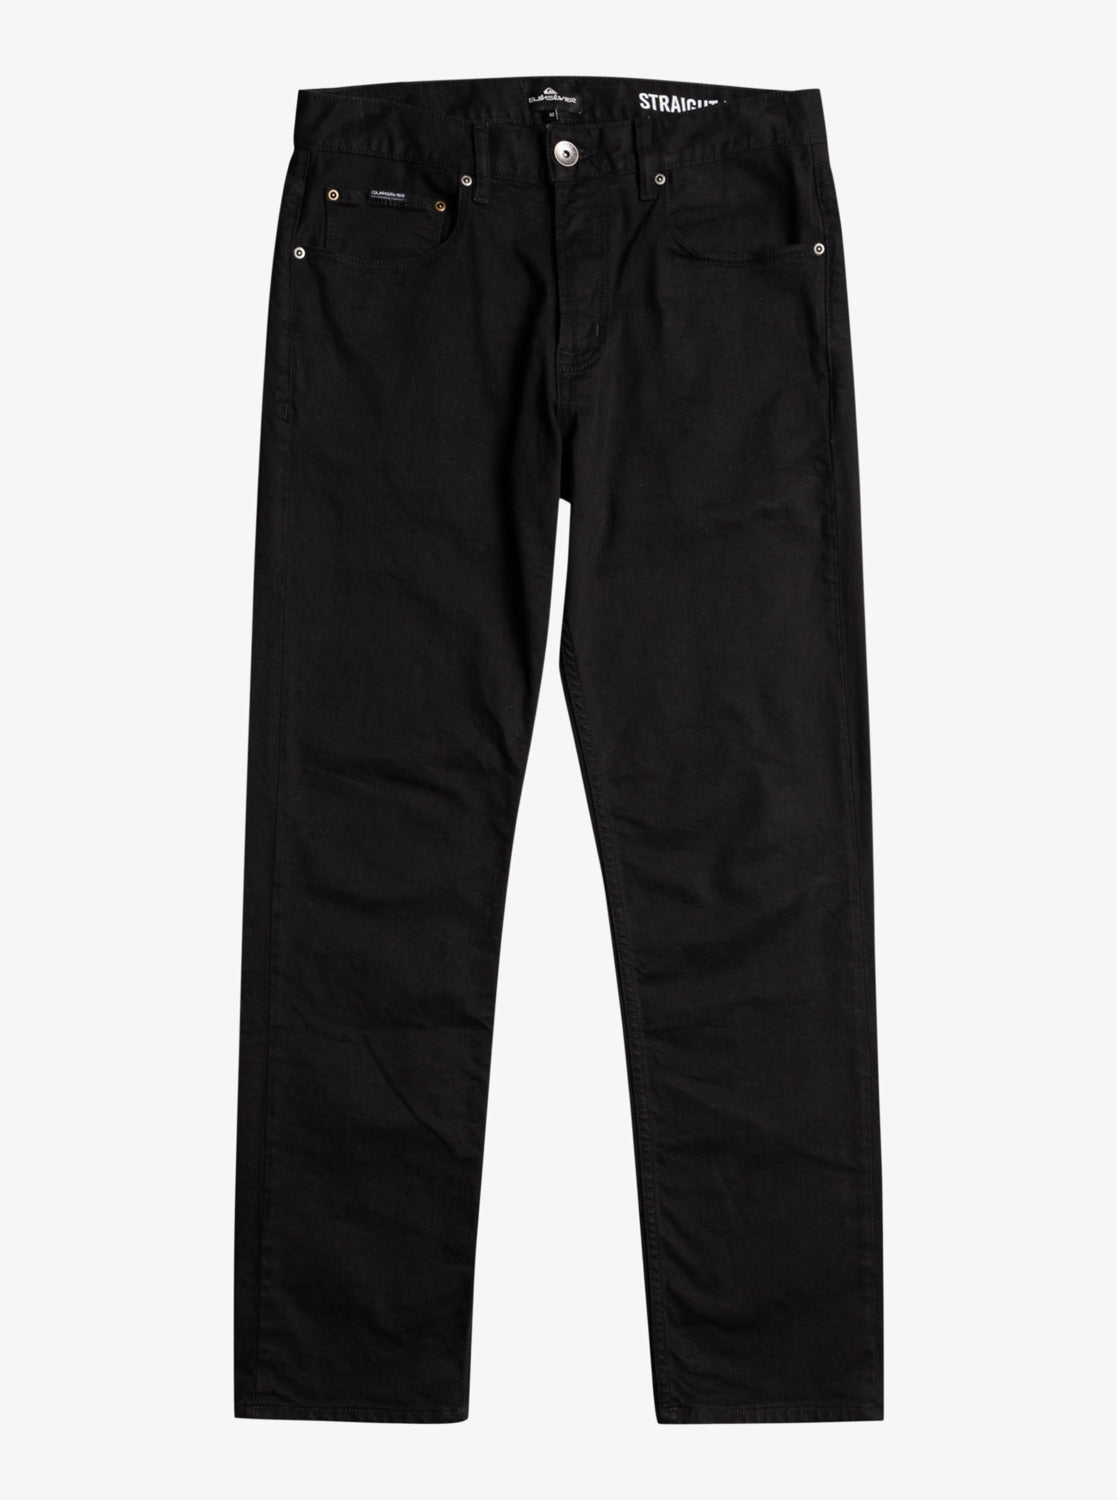 Quiksilver Modern Wave Black Jeans